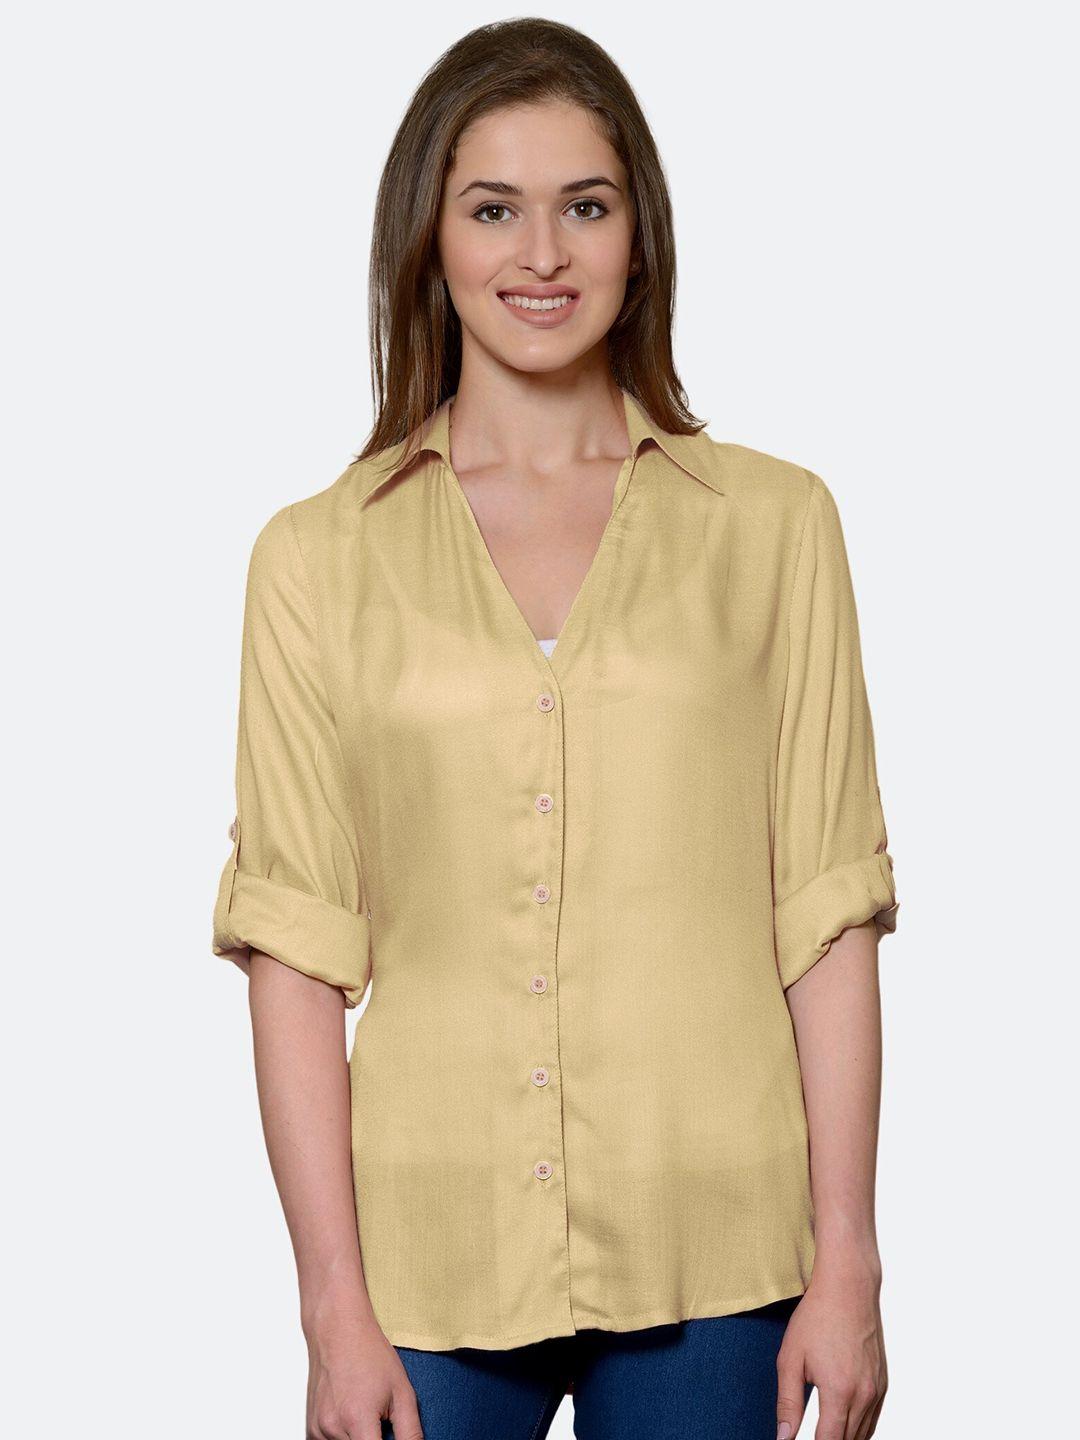 patrorna women gold-toned comfort casual shirt